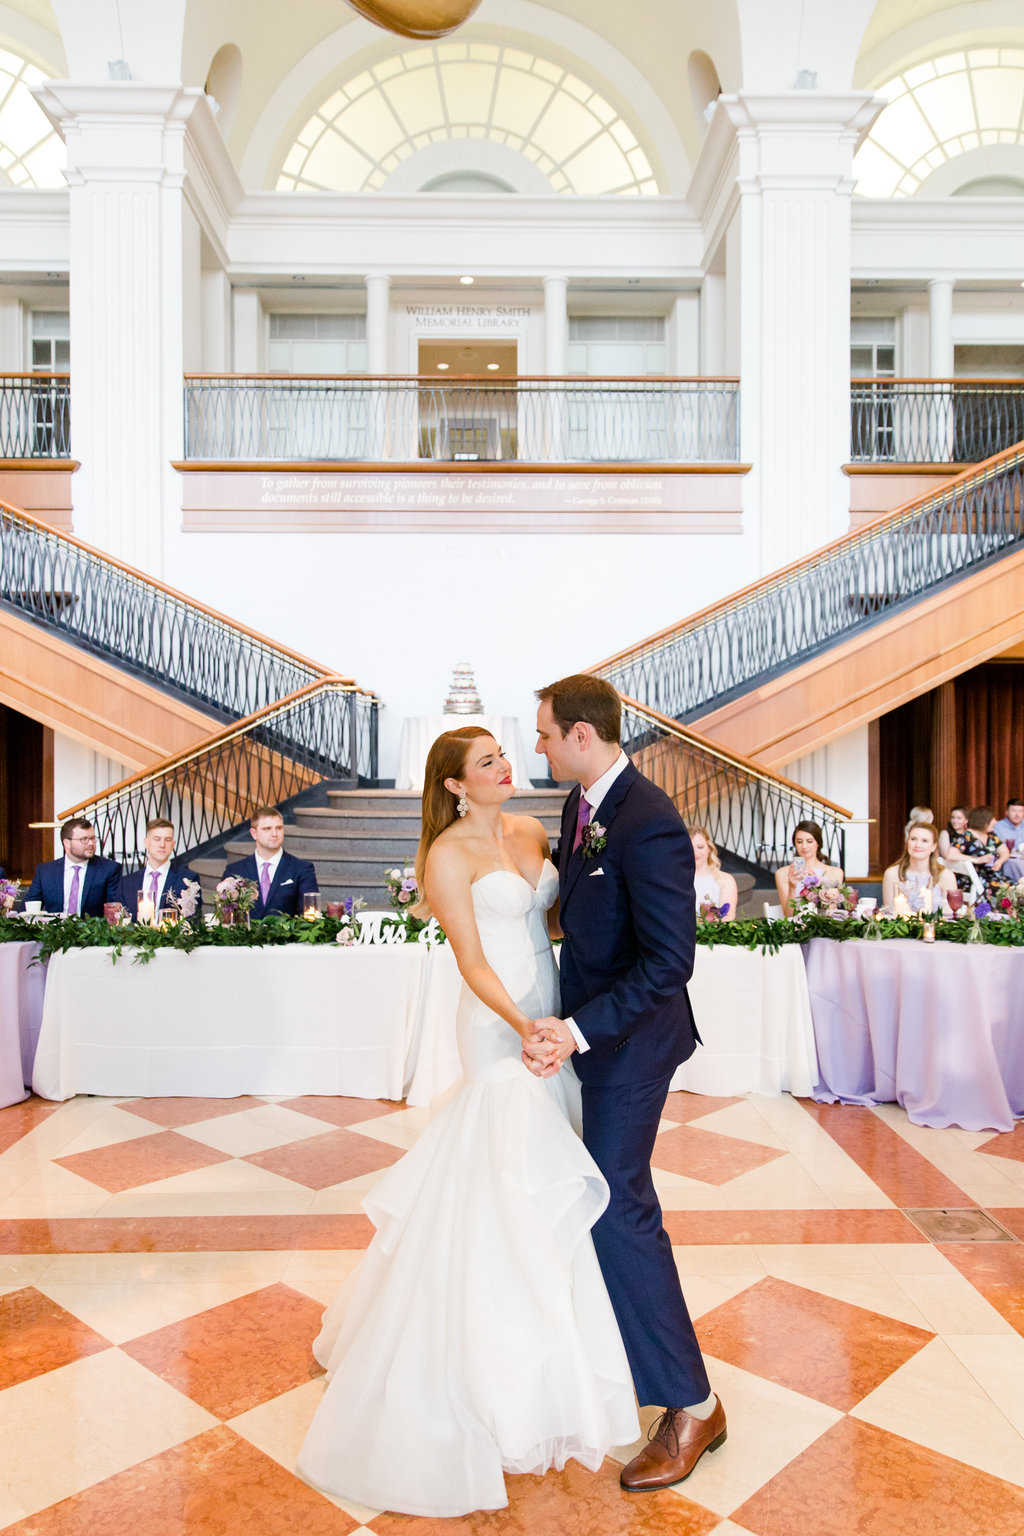 Indianapolis Wedding - Purple Wedding Details - The Overwhelmed Bride Wedding Blog